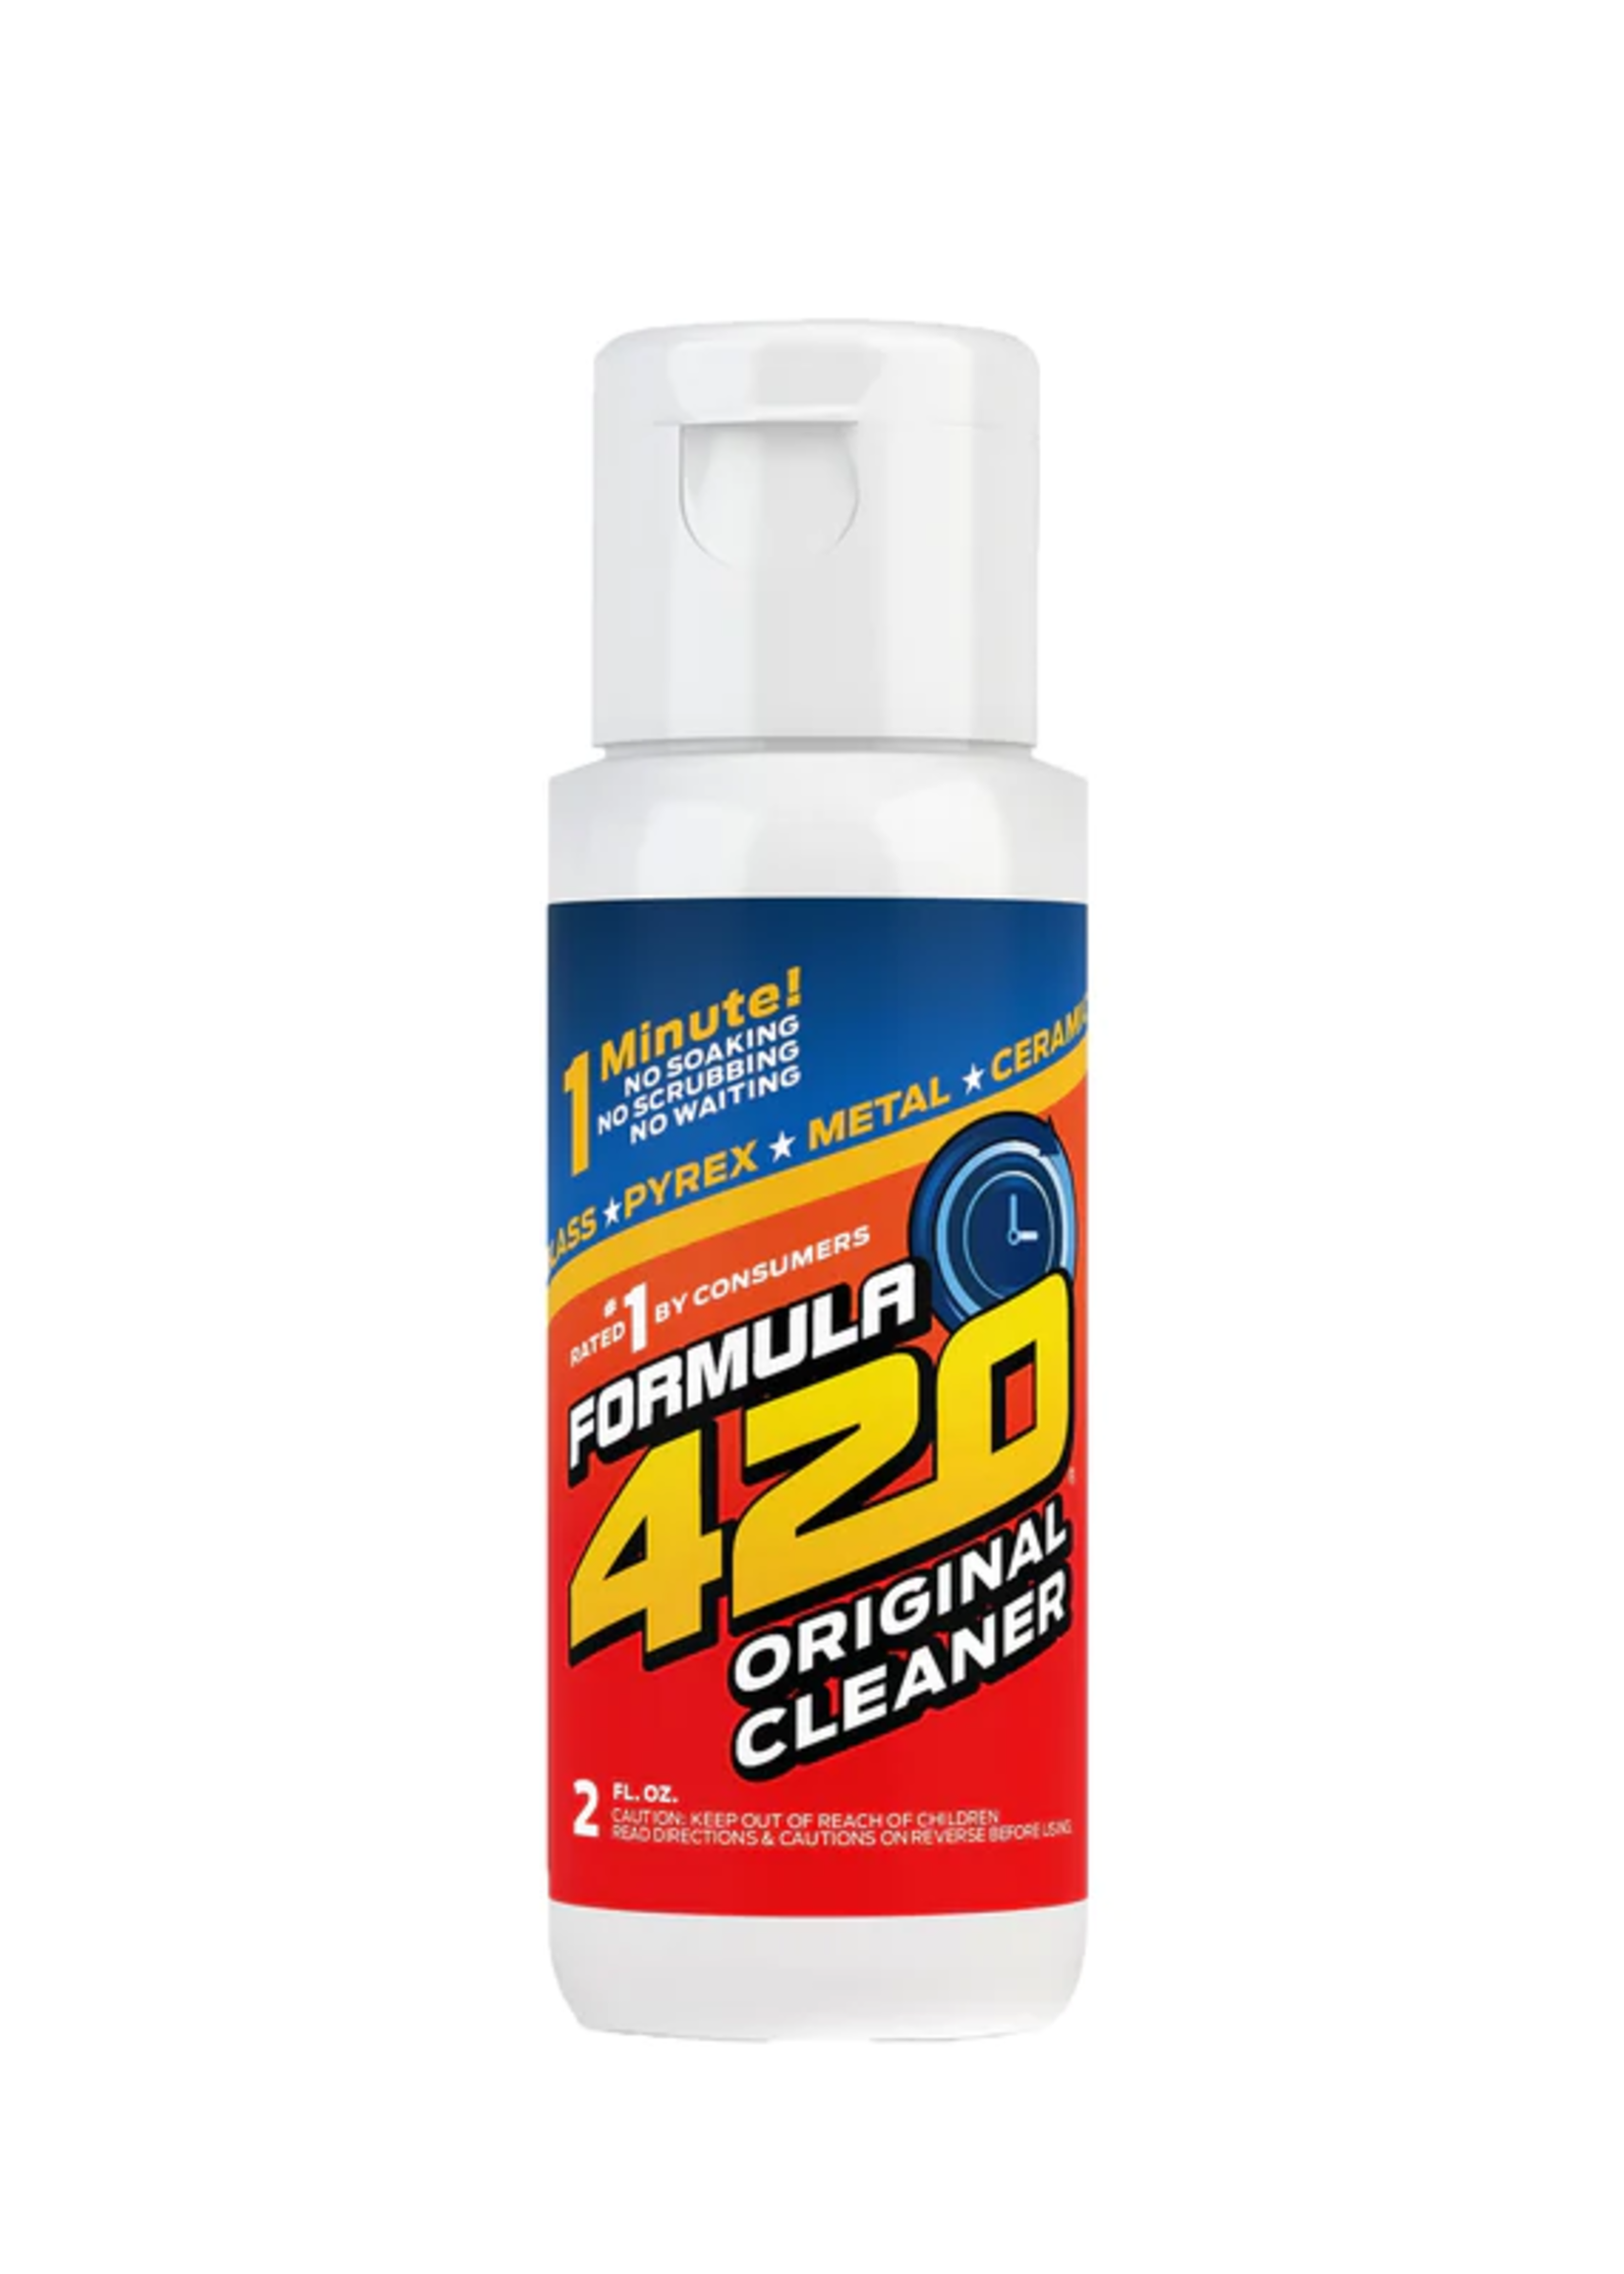 FORMULA 420 FORMULA 420 ORIGINAL CLEANER